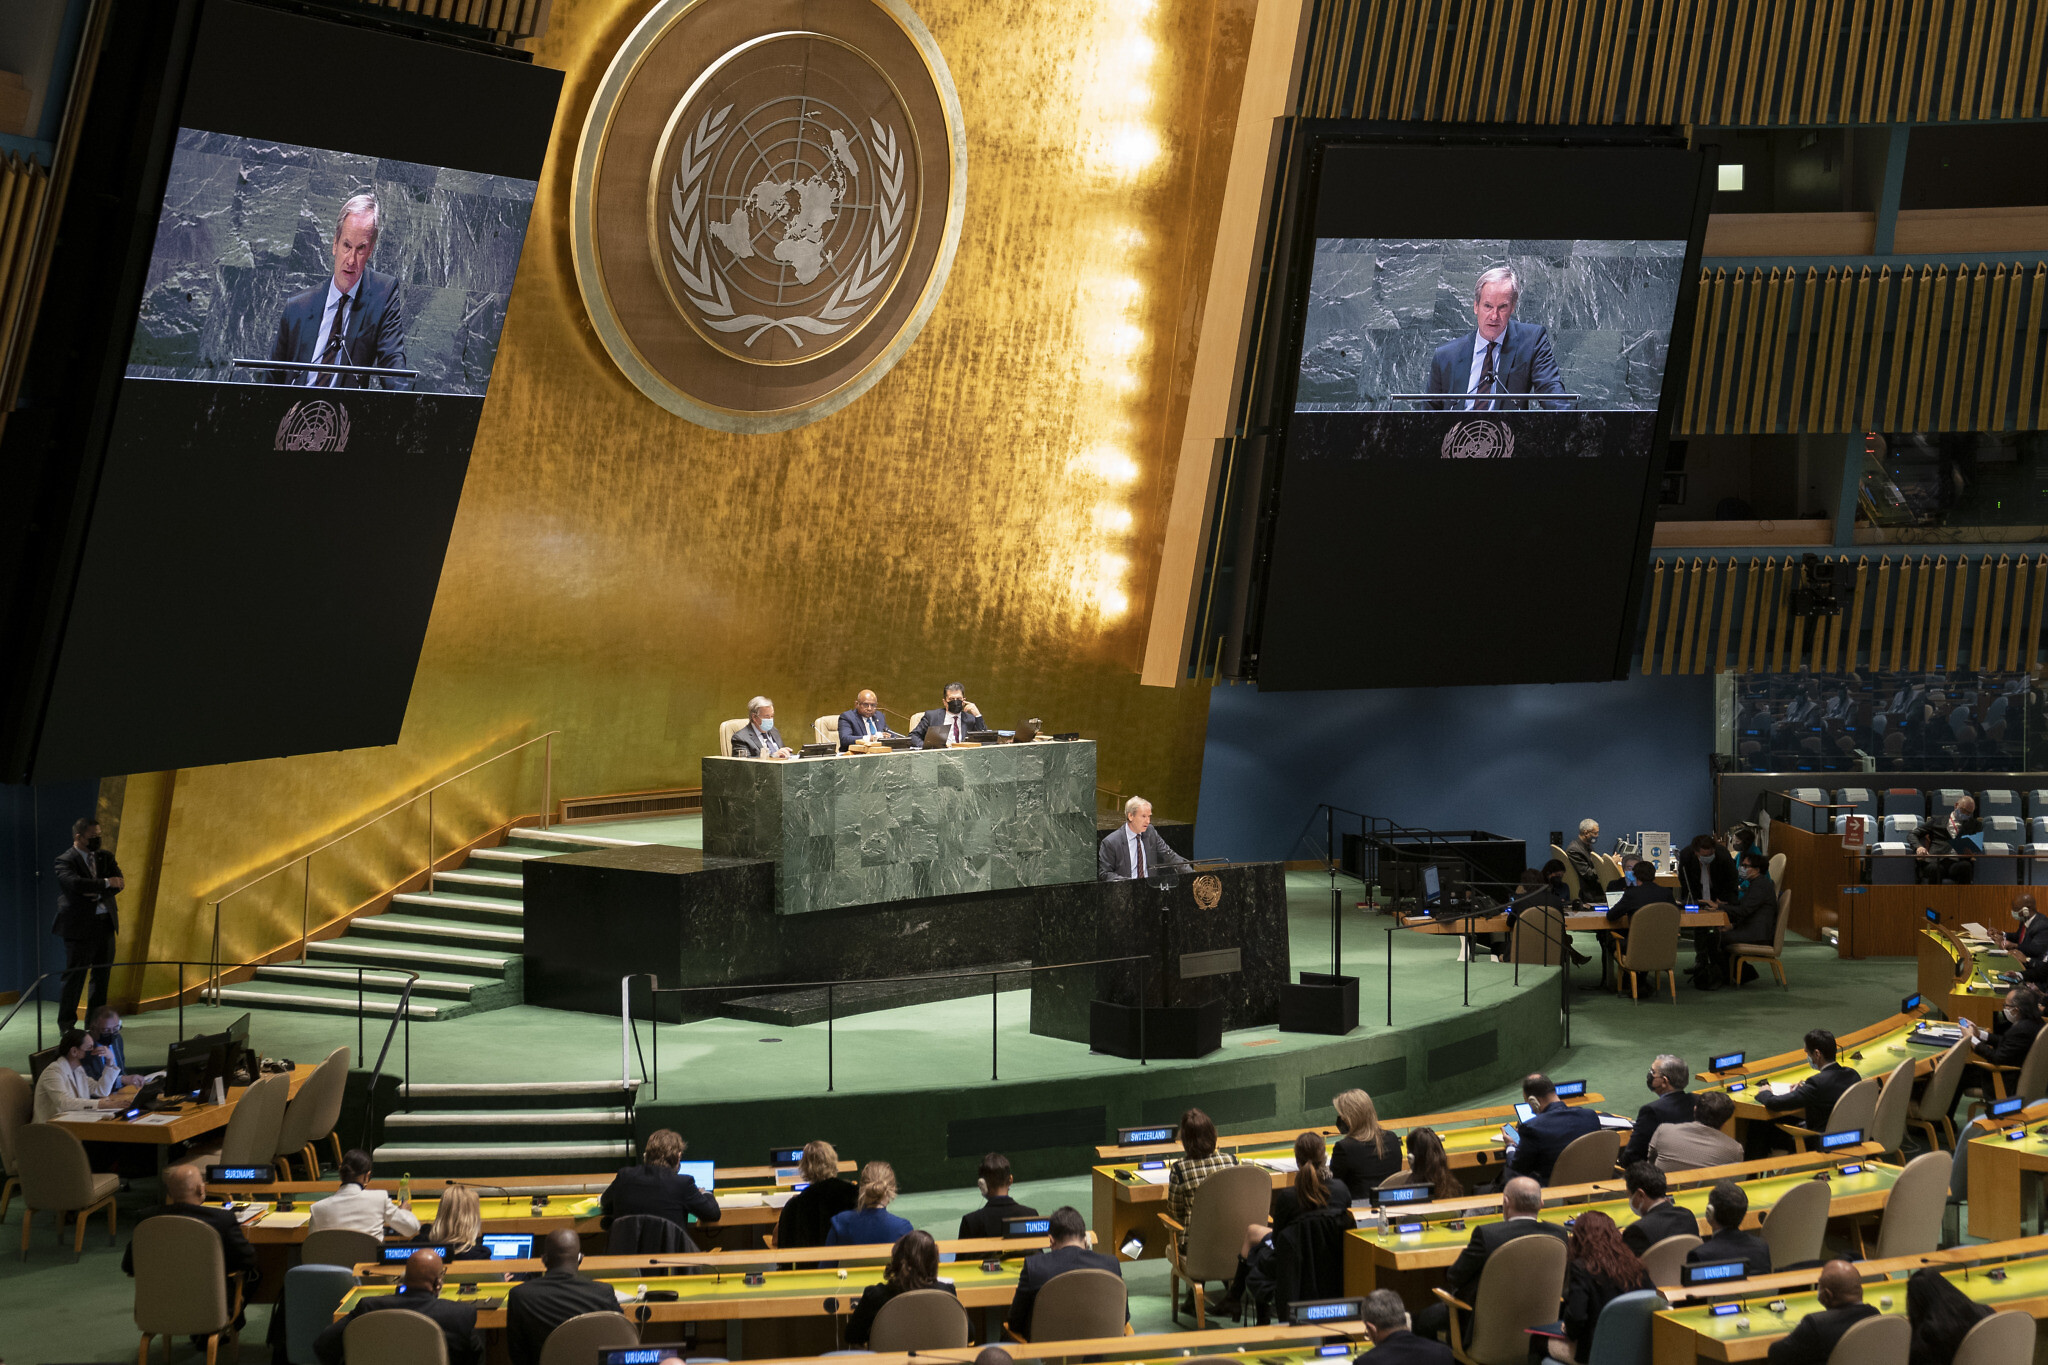 UN General Assembly Begins Emergency Session on Ukraine